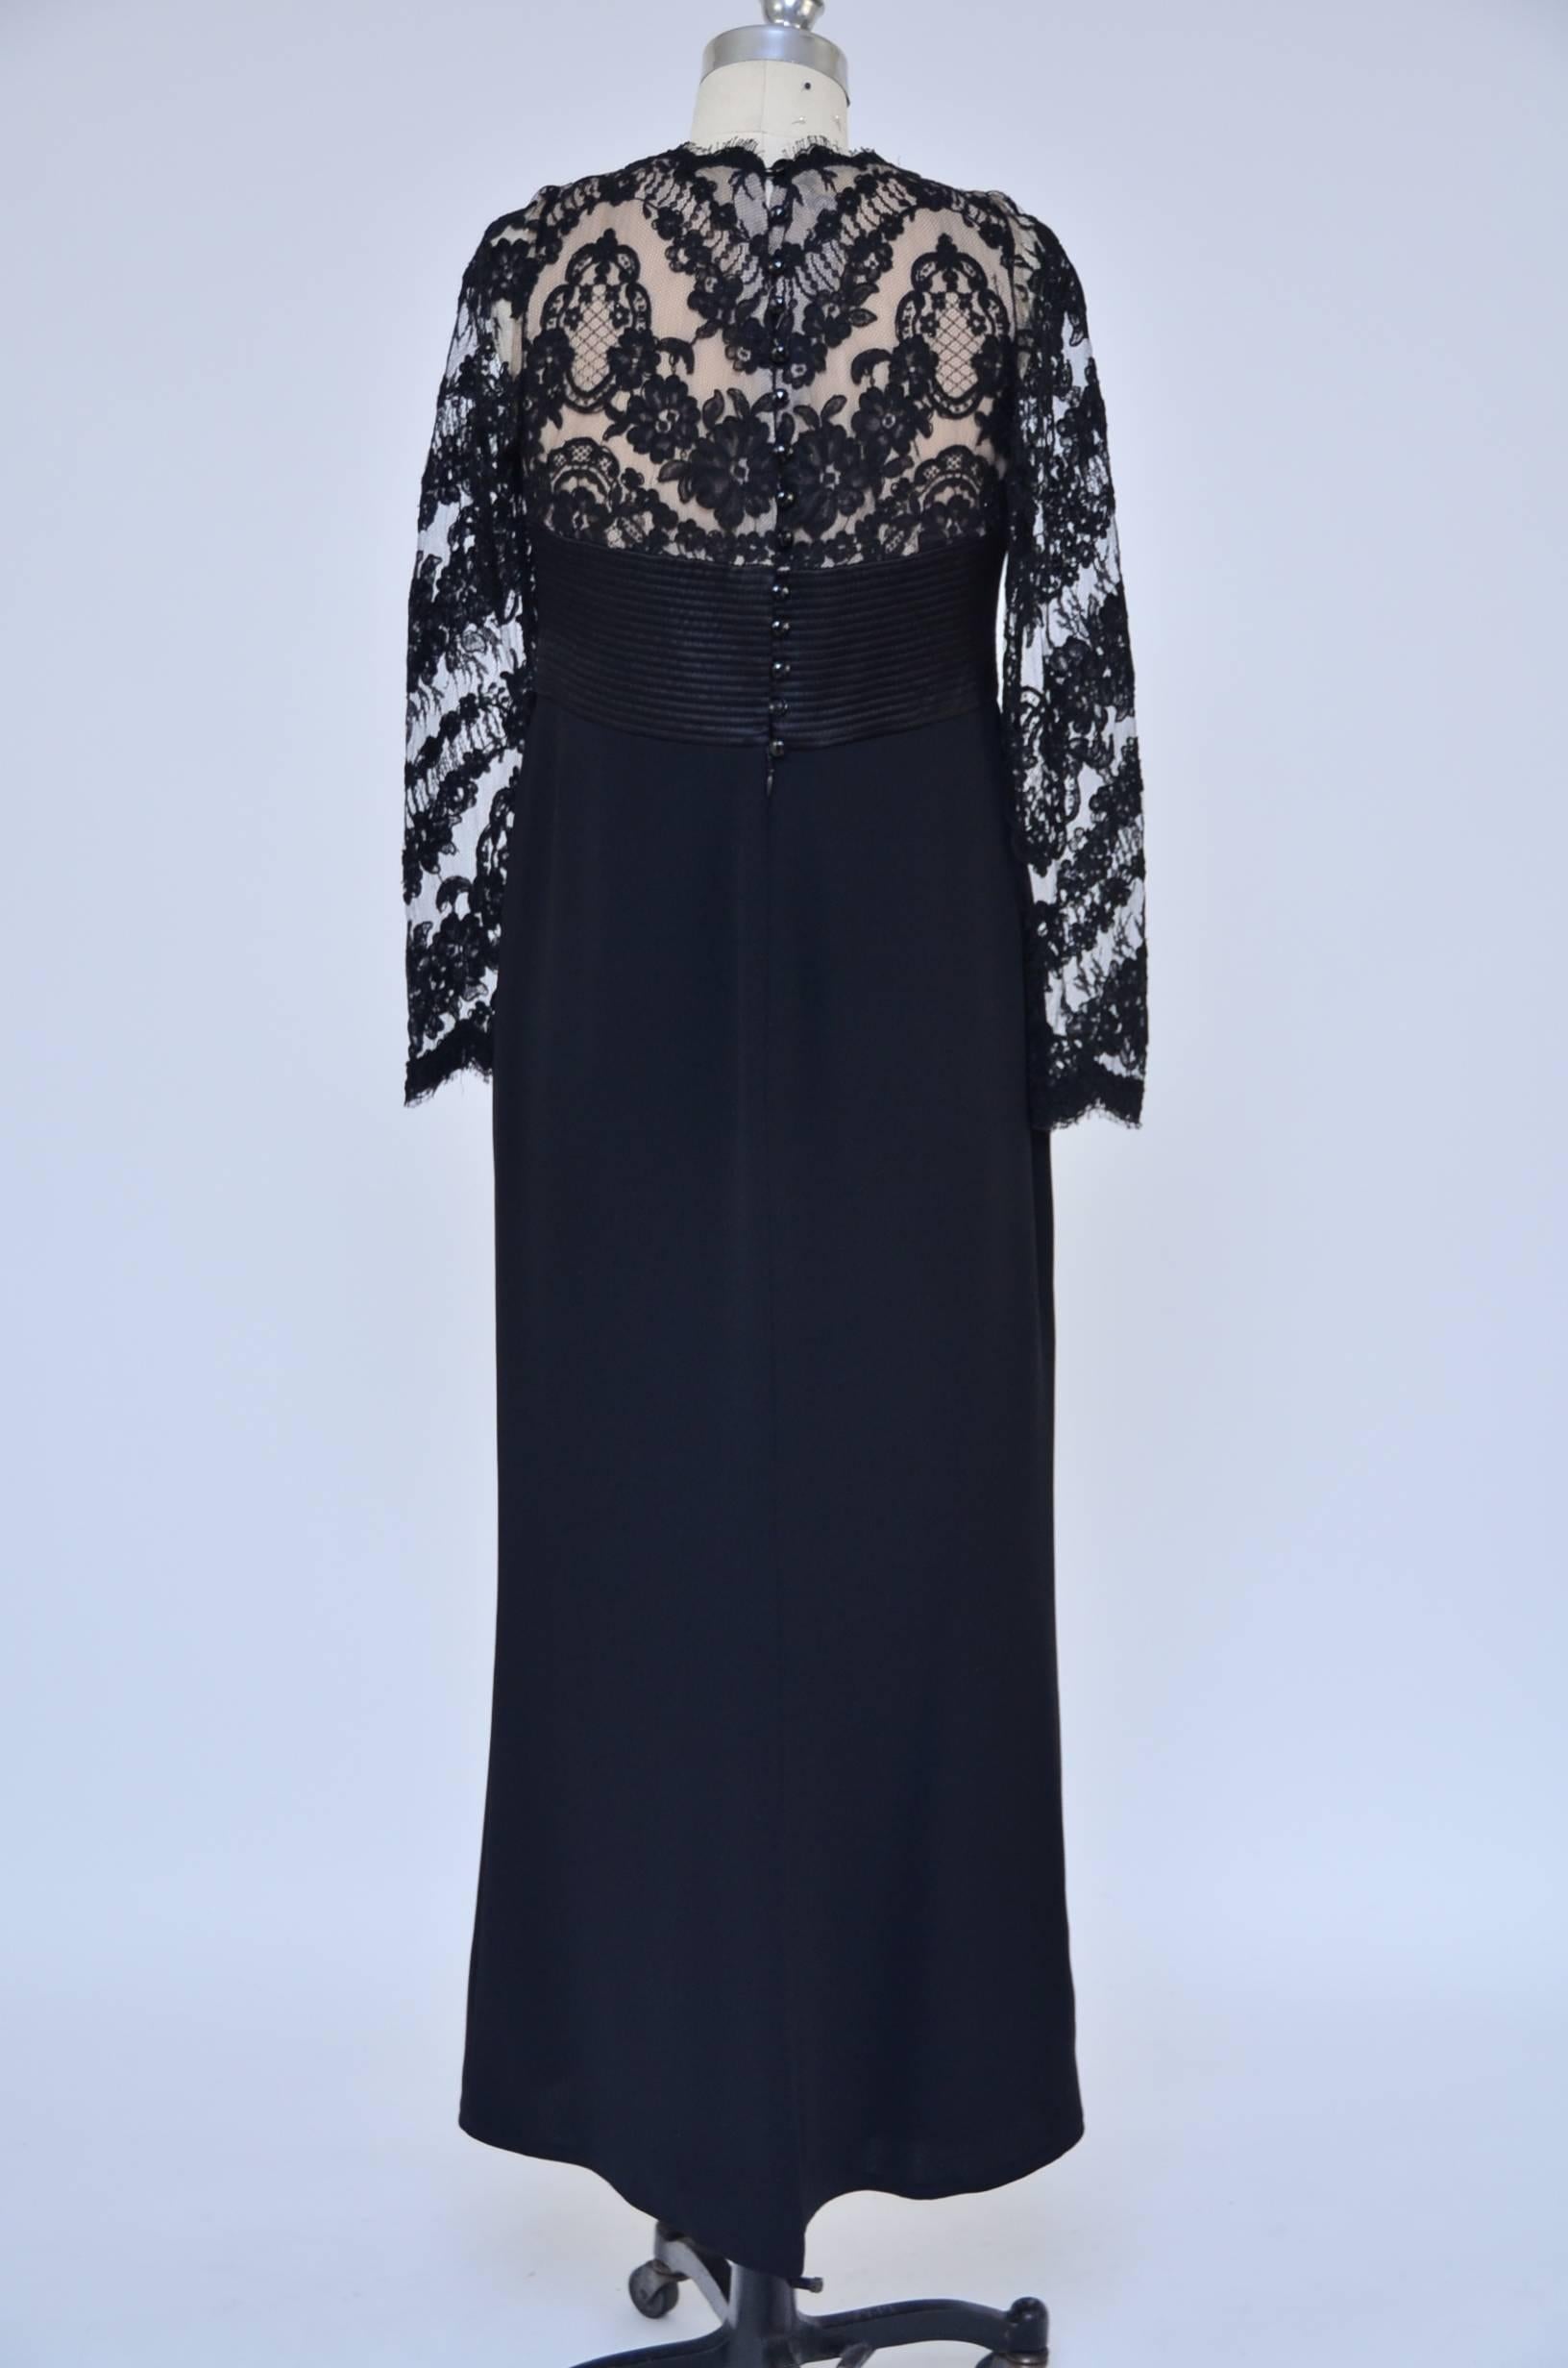 Badgley Mischka Black Lace Dress  .
Excellent mint condition.
Approximate measurements:underarm 16.5